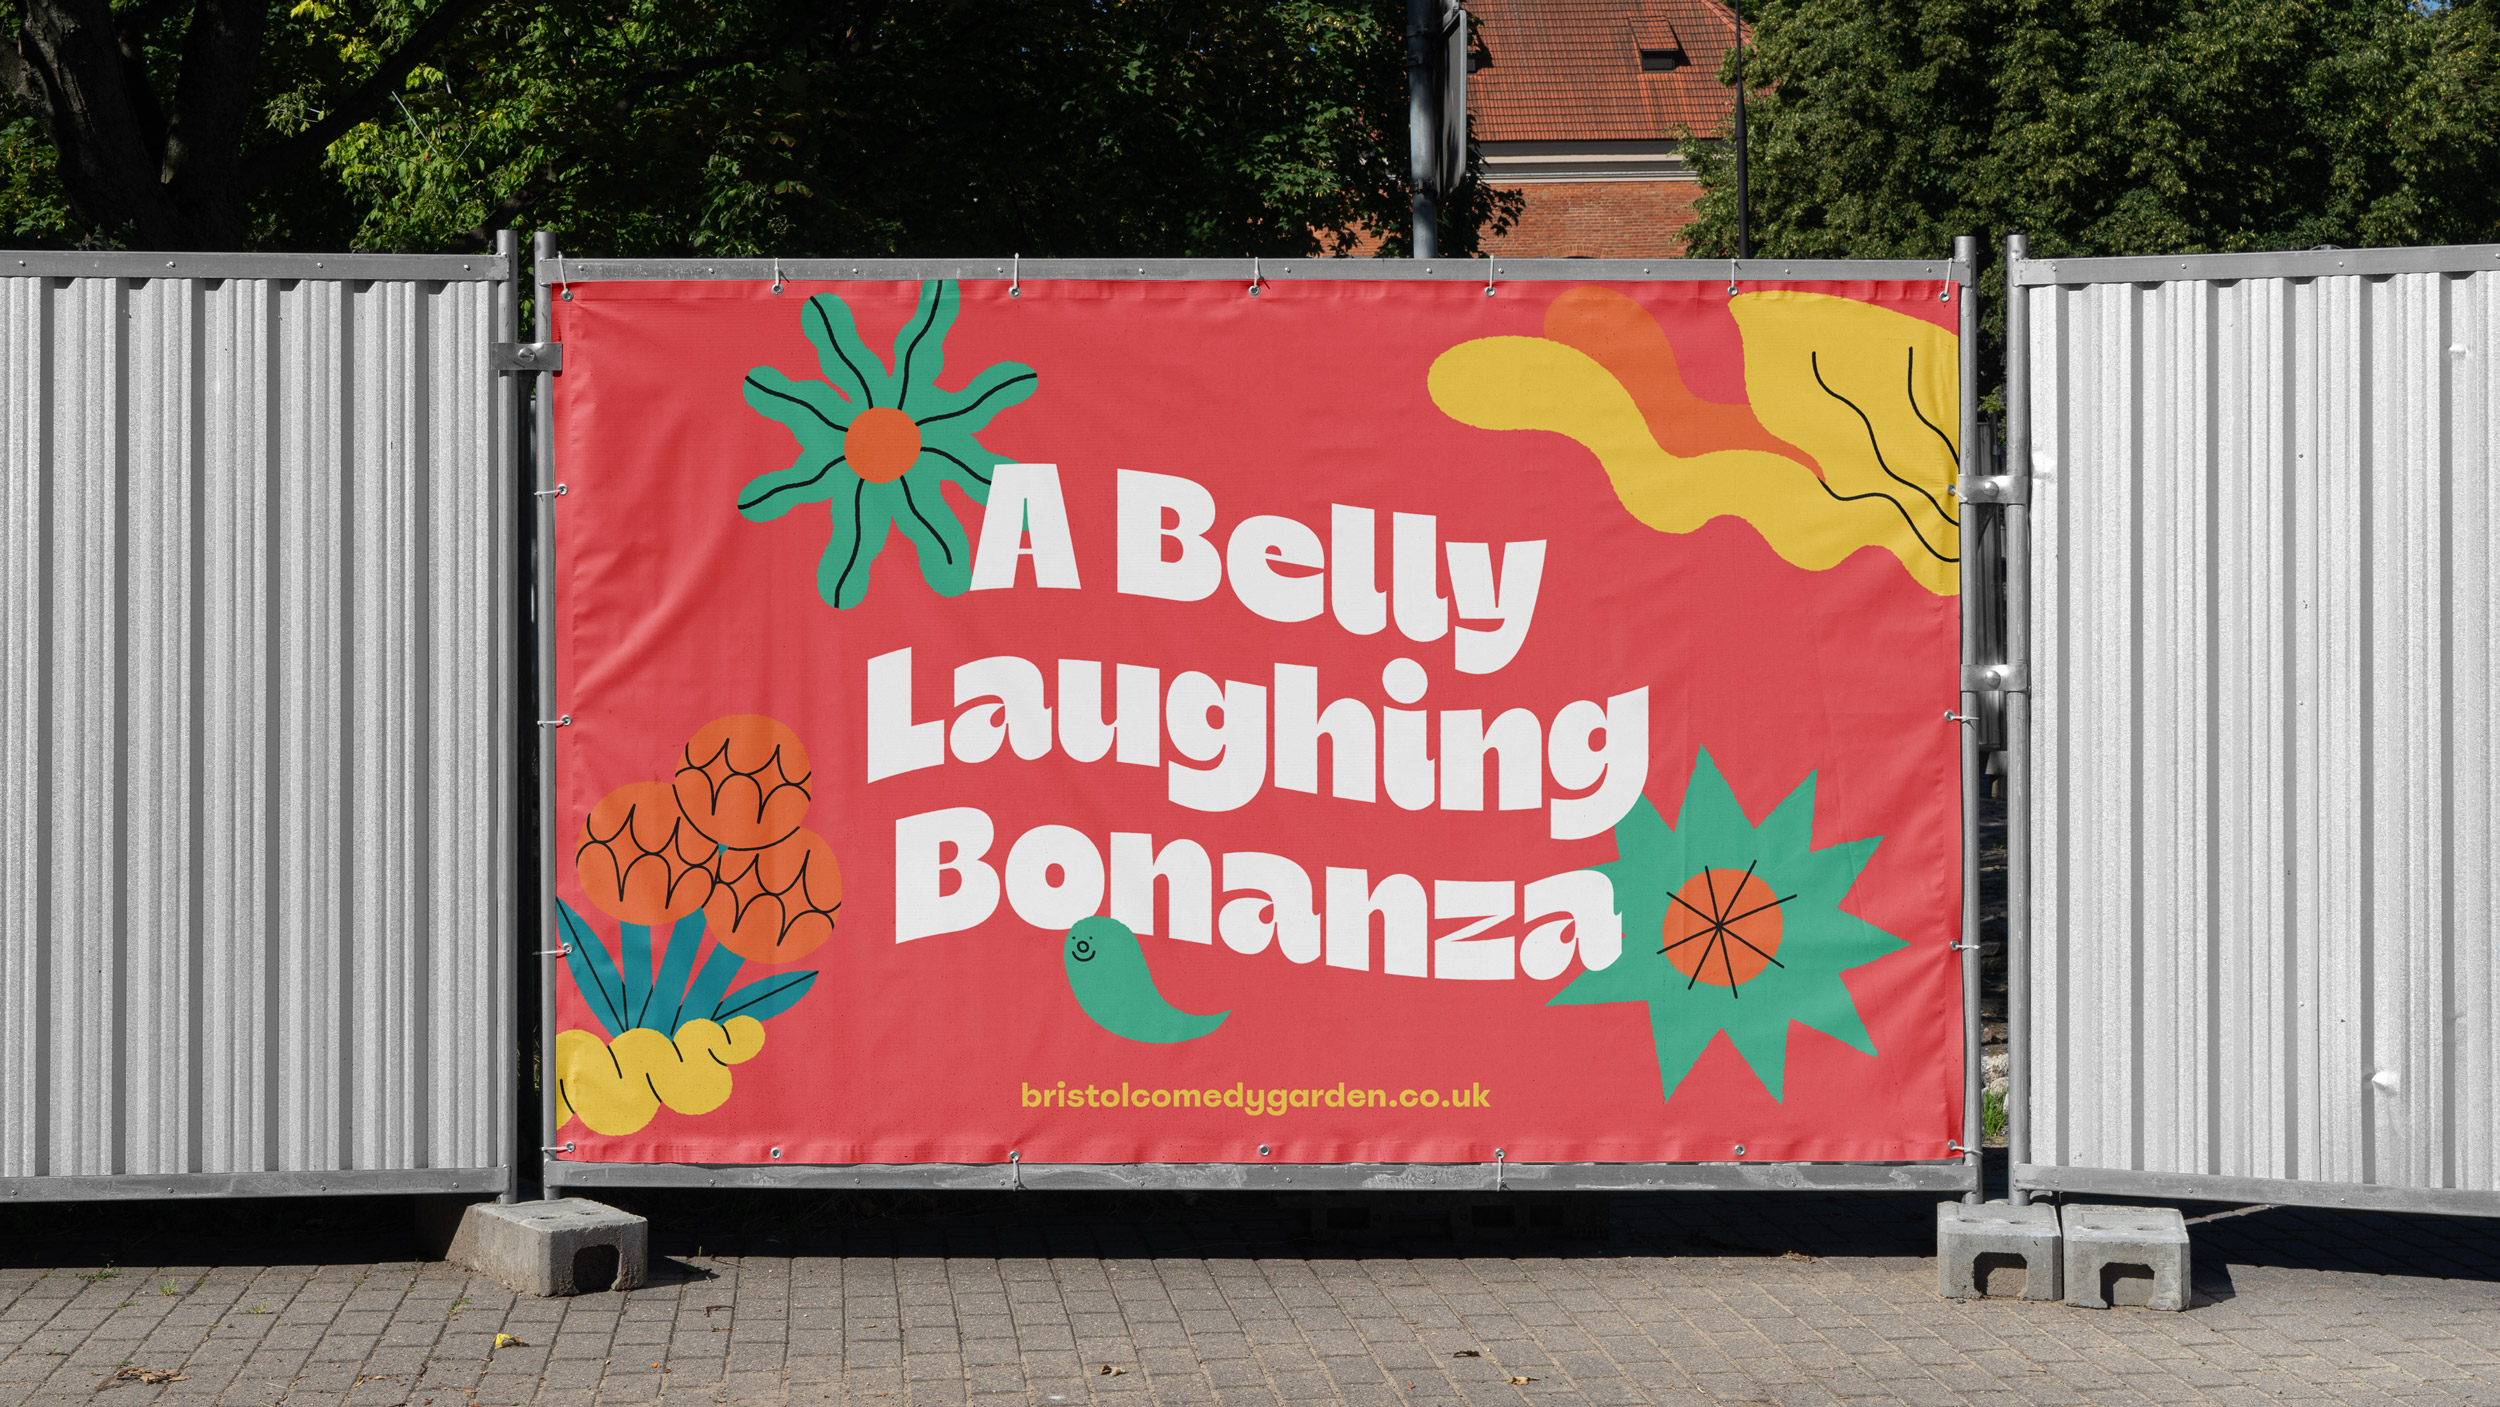 Bristol Comedy Garden Event Branding by Oat Studio